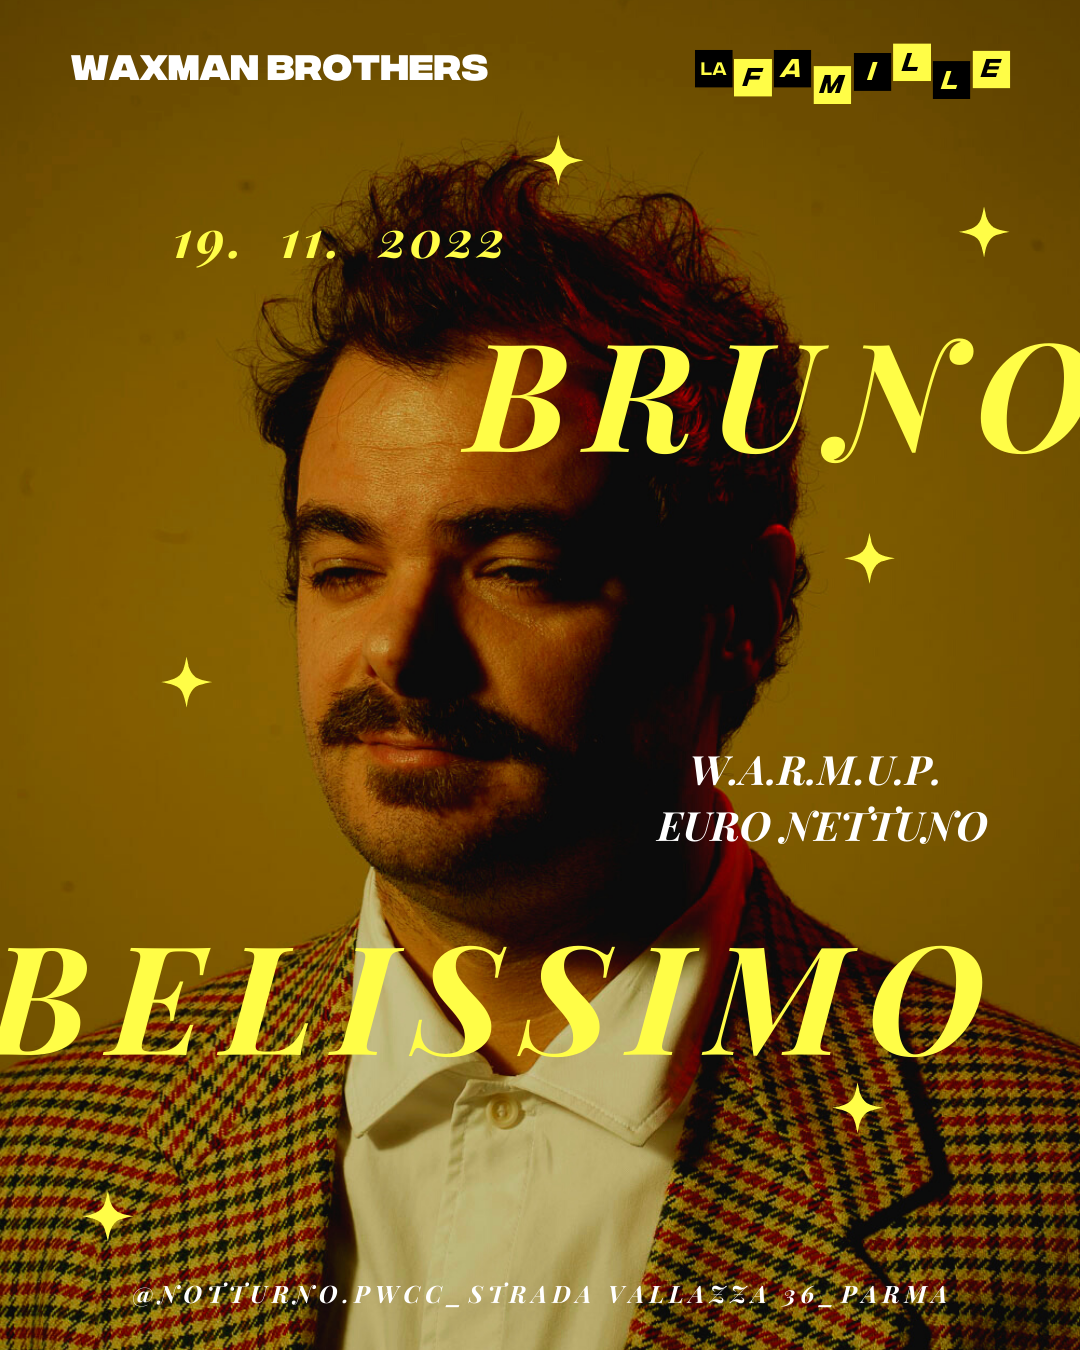 BRUNO BELLISSIMO - 19 11 2022